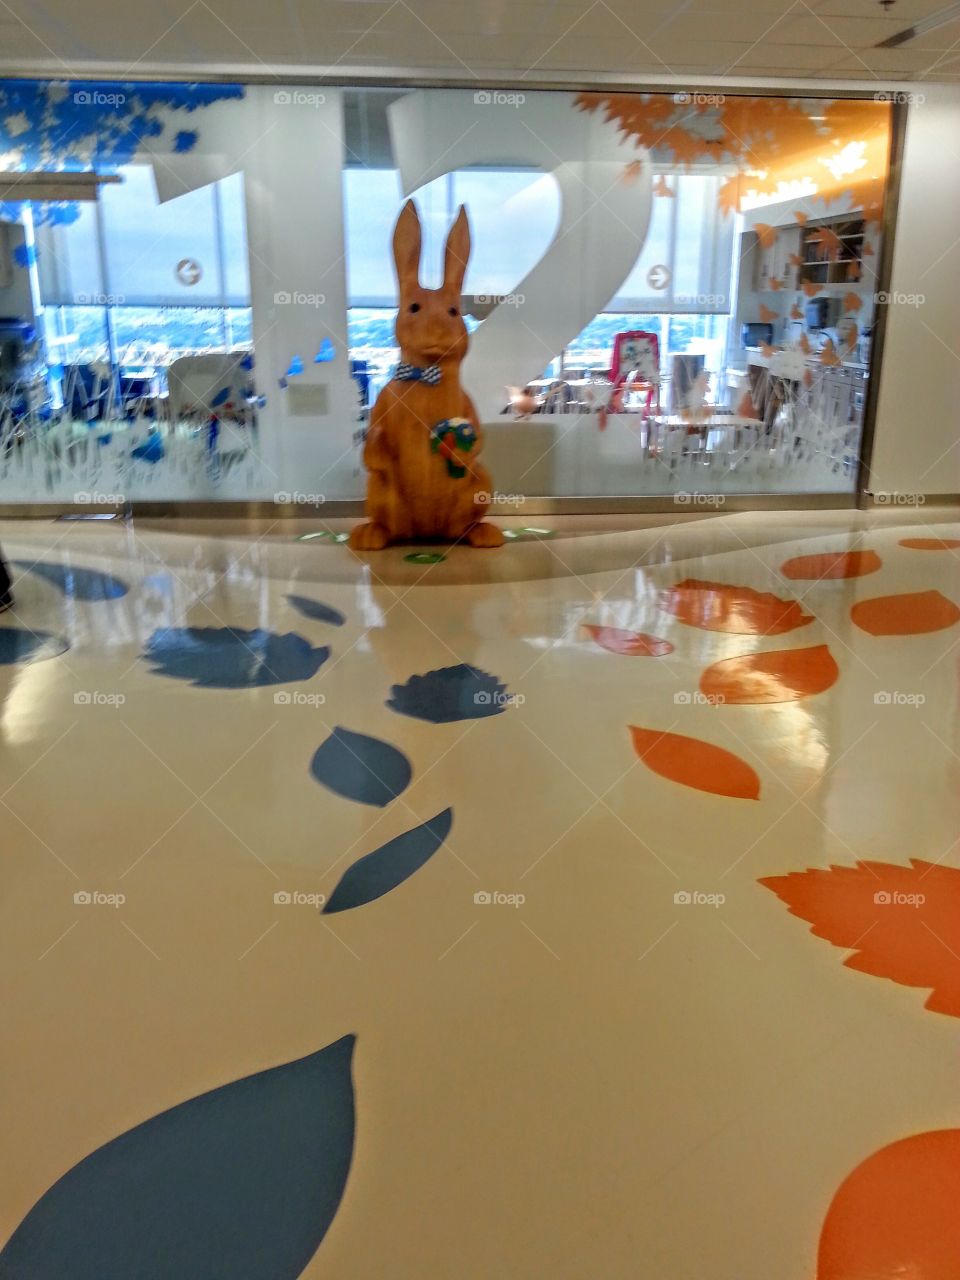 Children's Hospital Play Area. Flooring , rabbit and play area at Children's Hospital in Columbus,  Ohio.